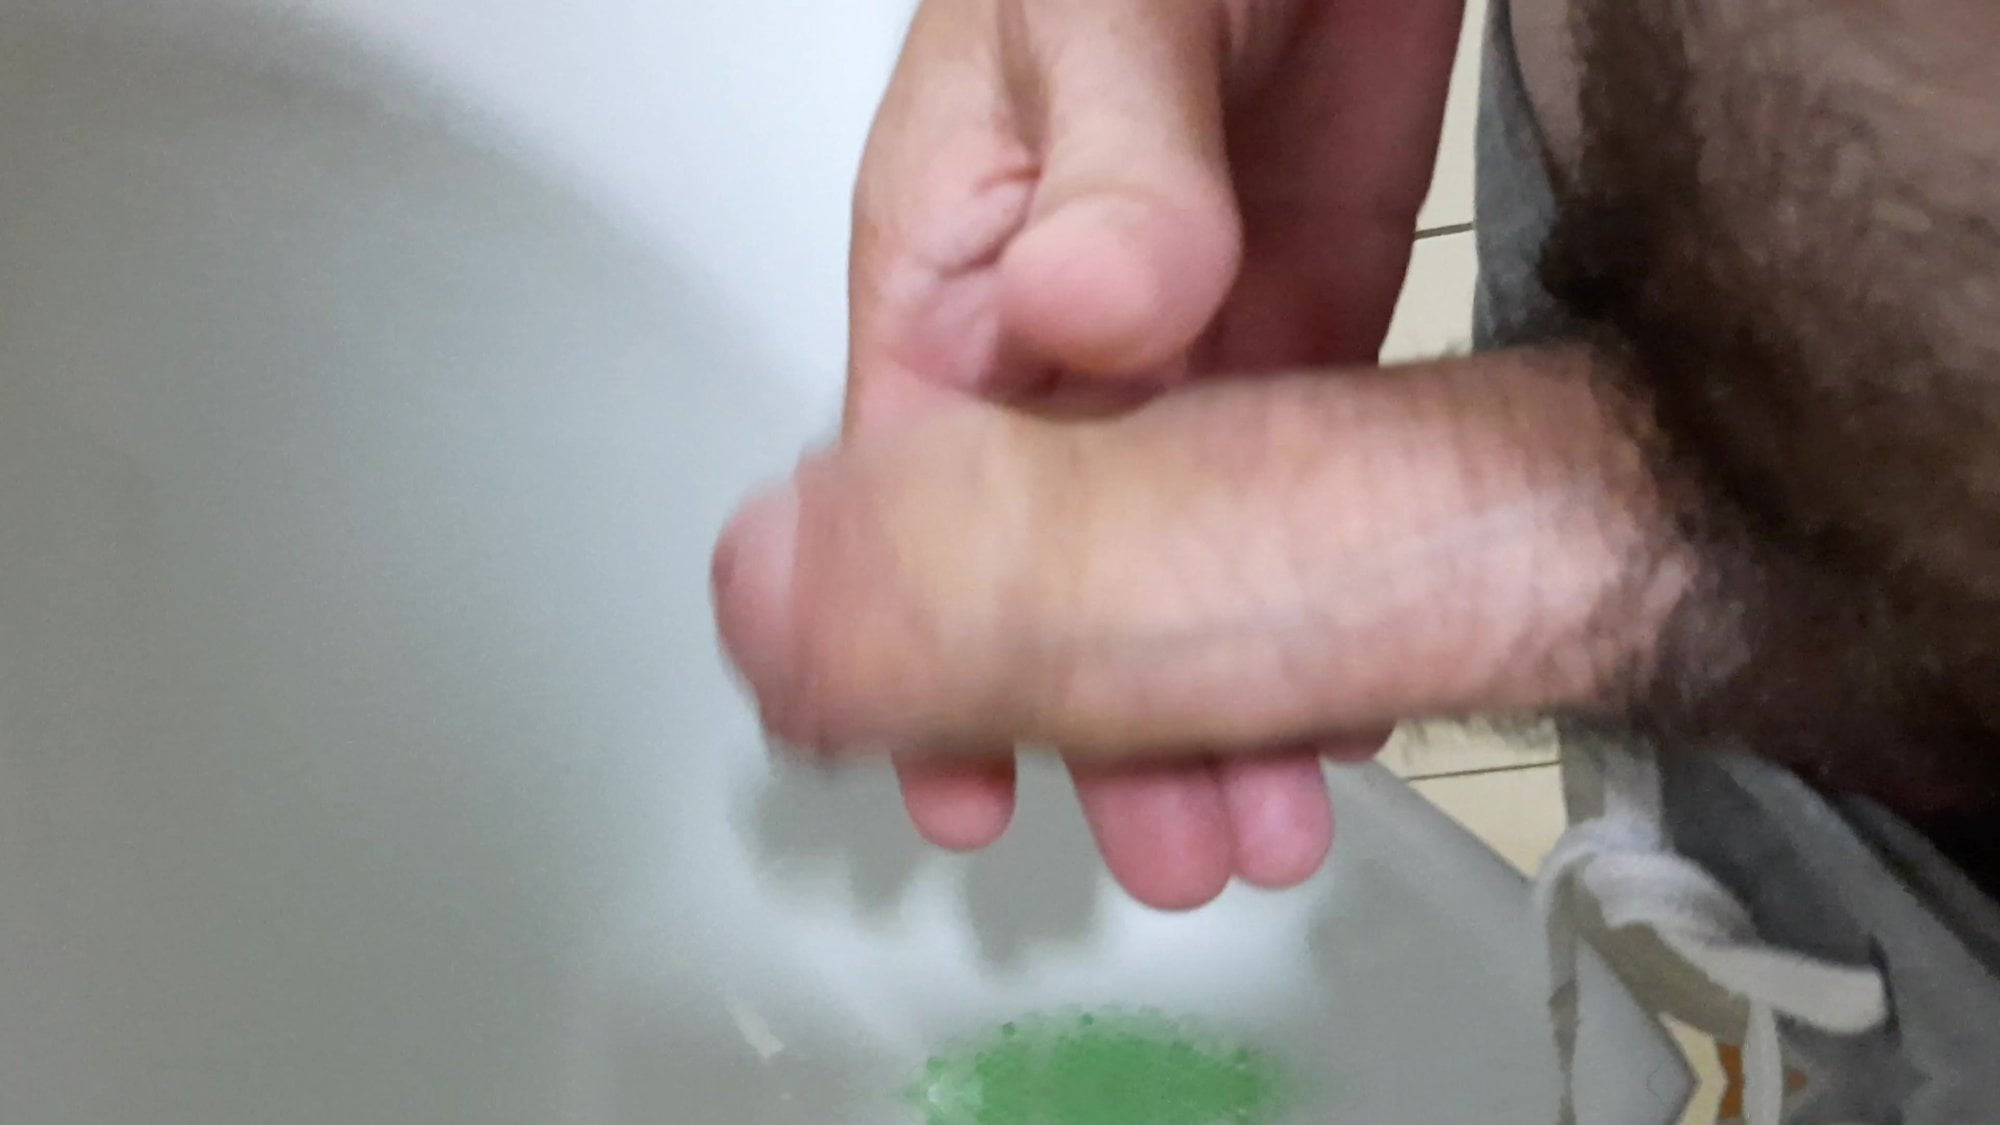 urinal voyeur jerk video Adult Pics Hq